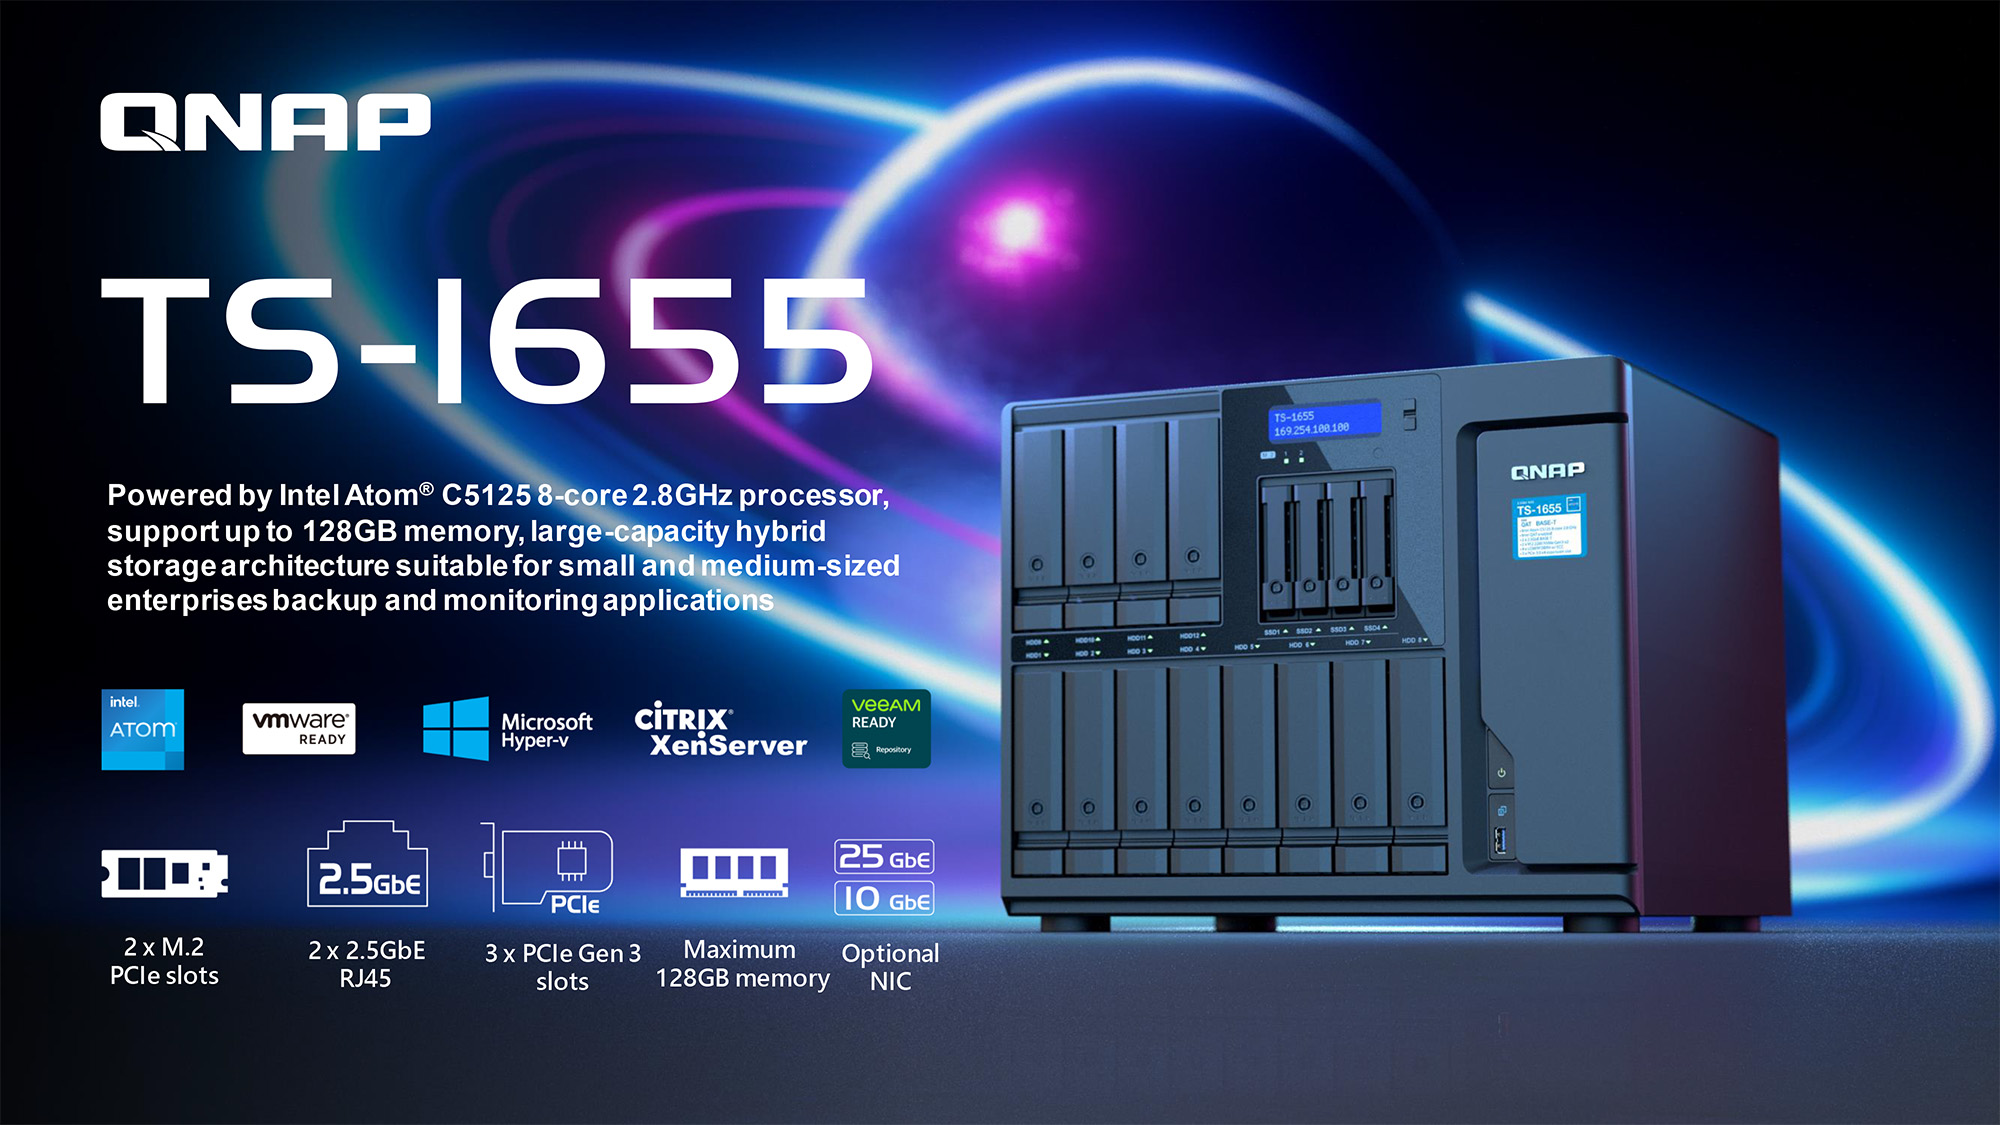 ts-1655-with-intel-atom-c5125-hybrid-storage-for-smb-backup